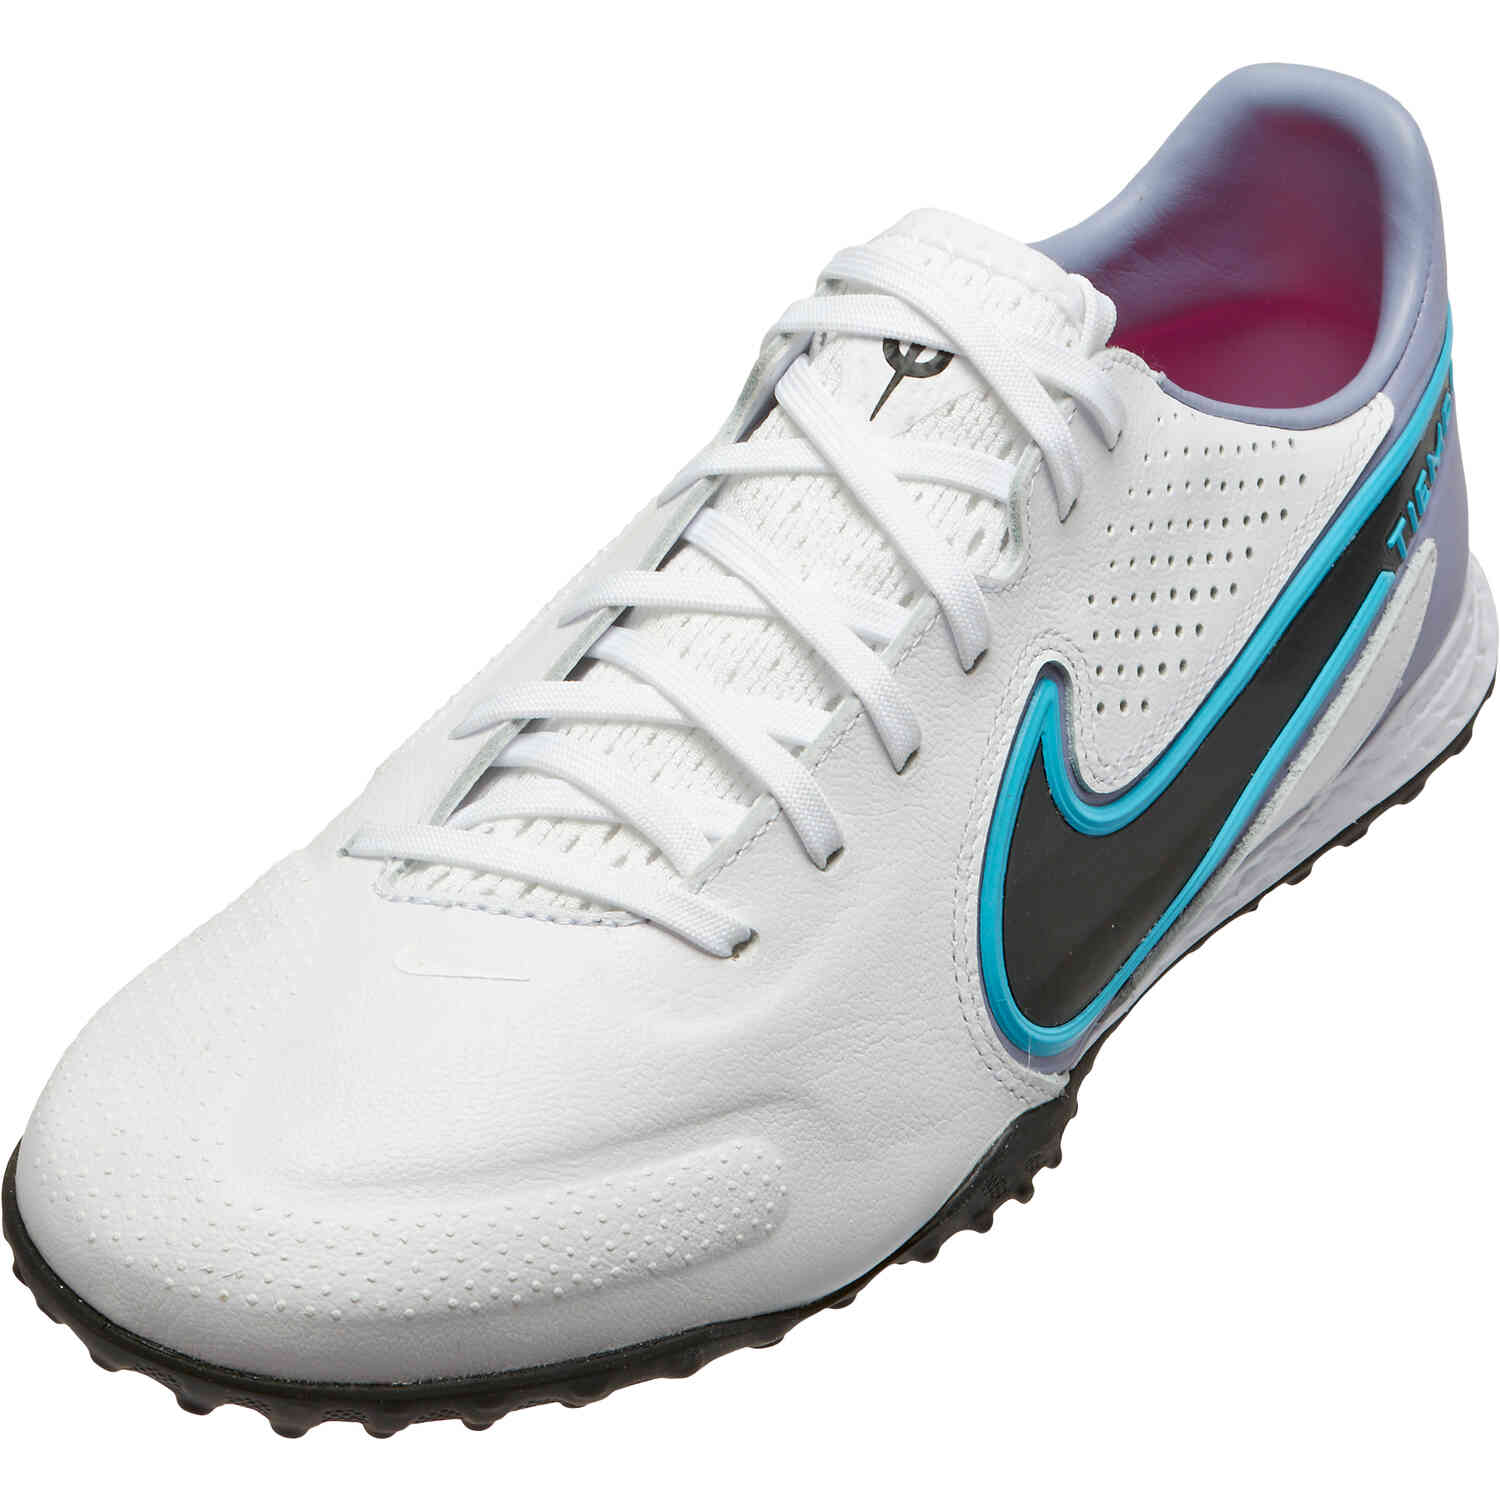 Nike Tiempo Legend 9 Pro TF Turf Soccer Shoes - White, Baltic Blue, Pink  Blast & Black - Soccer Master